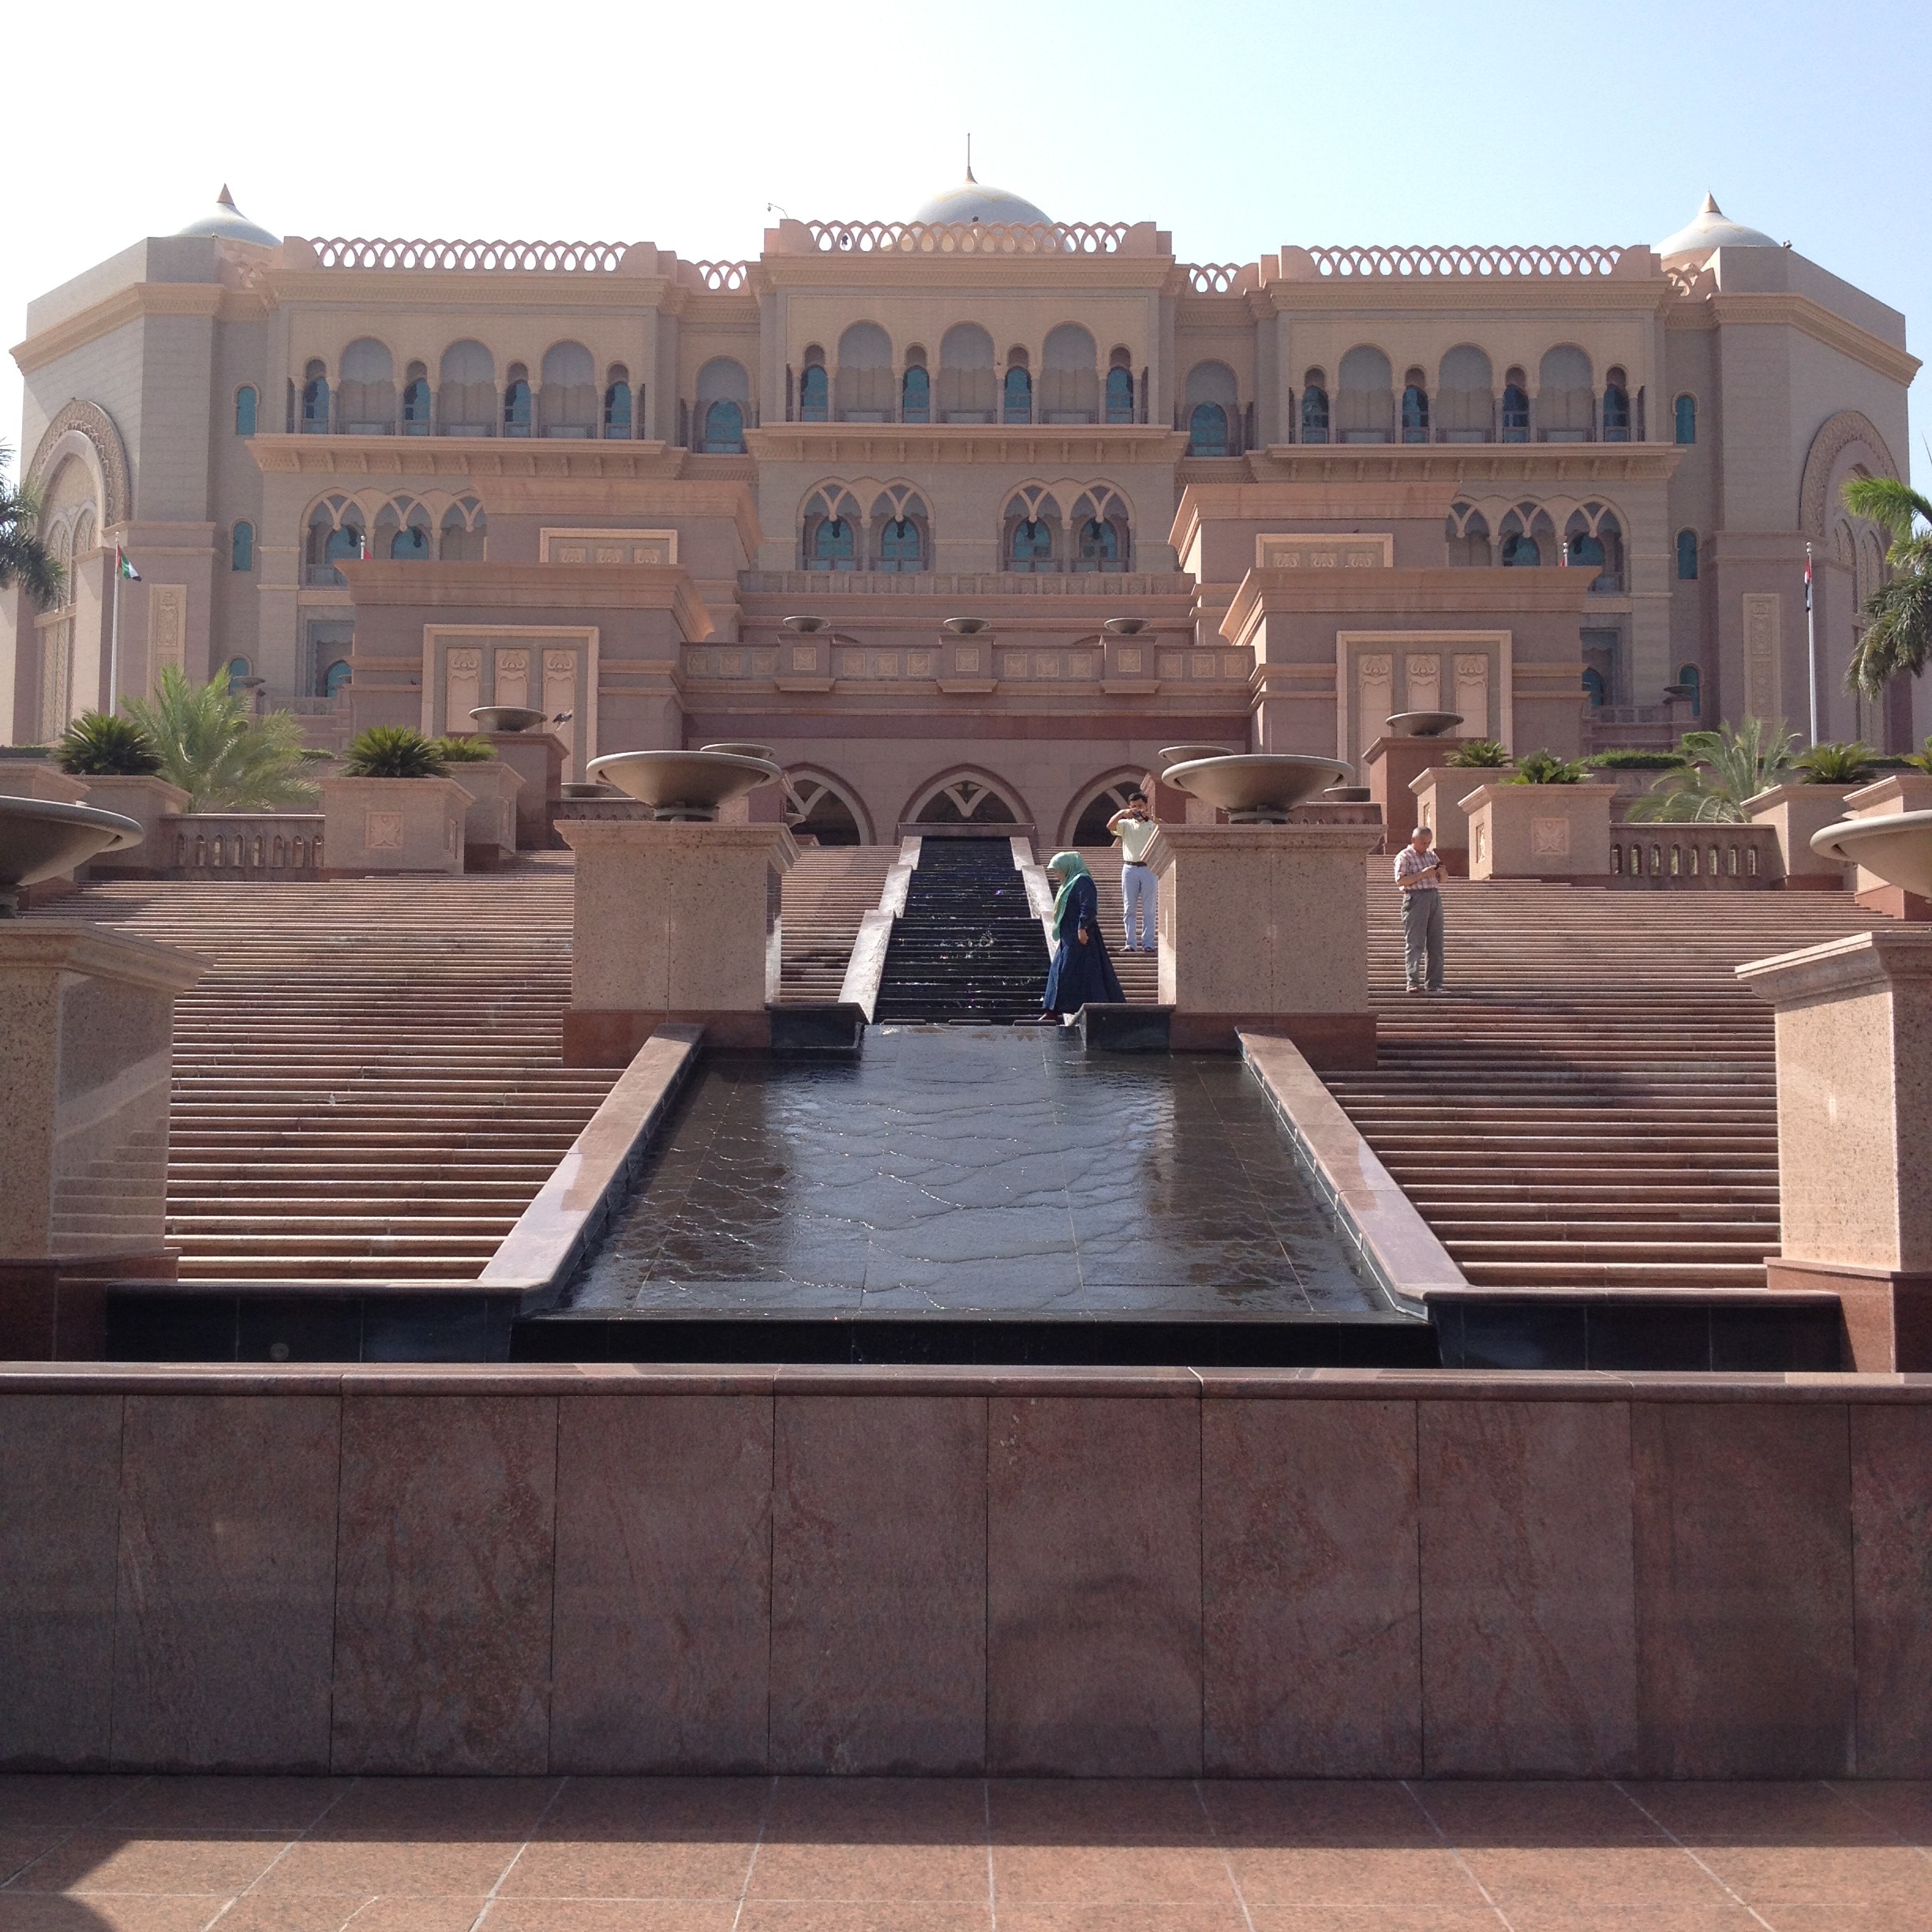 Abu Dhabi dress code and palace